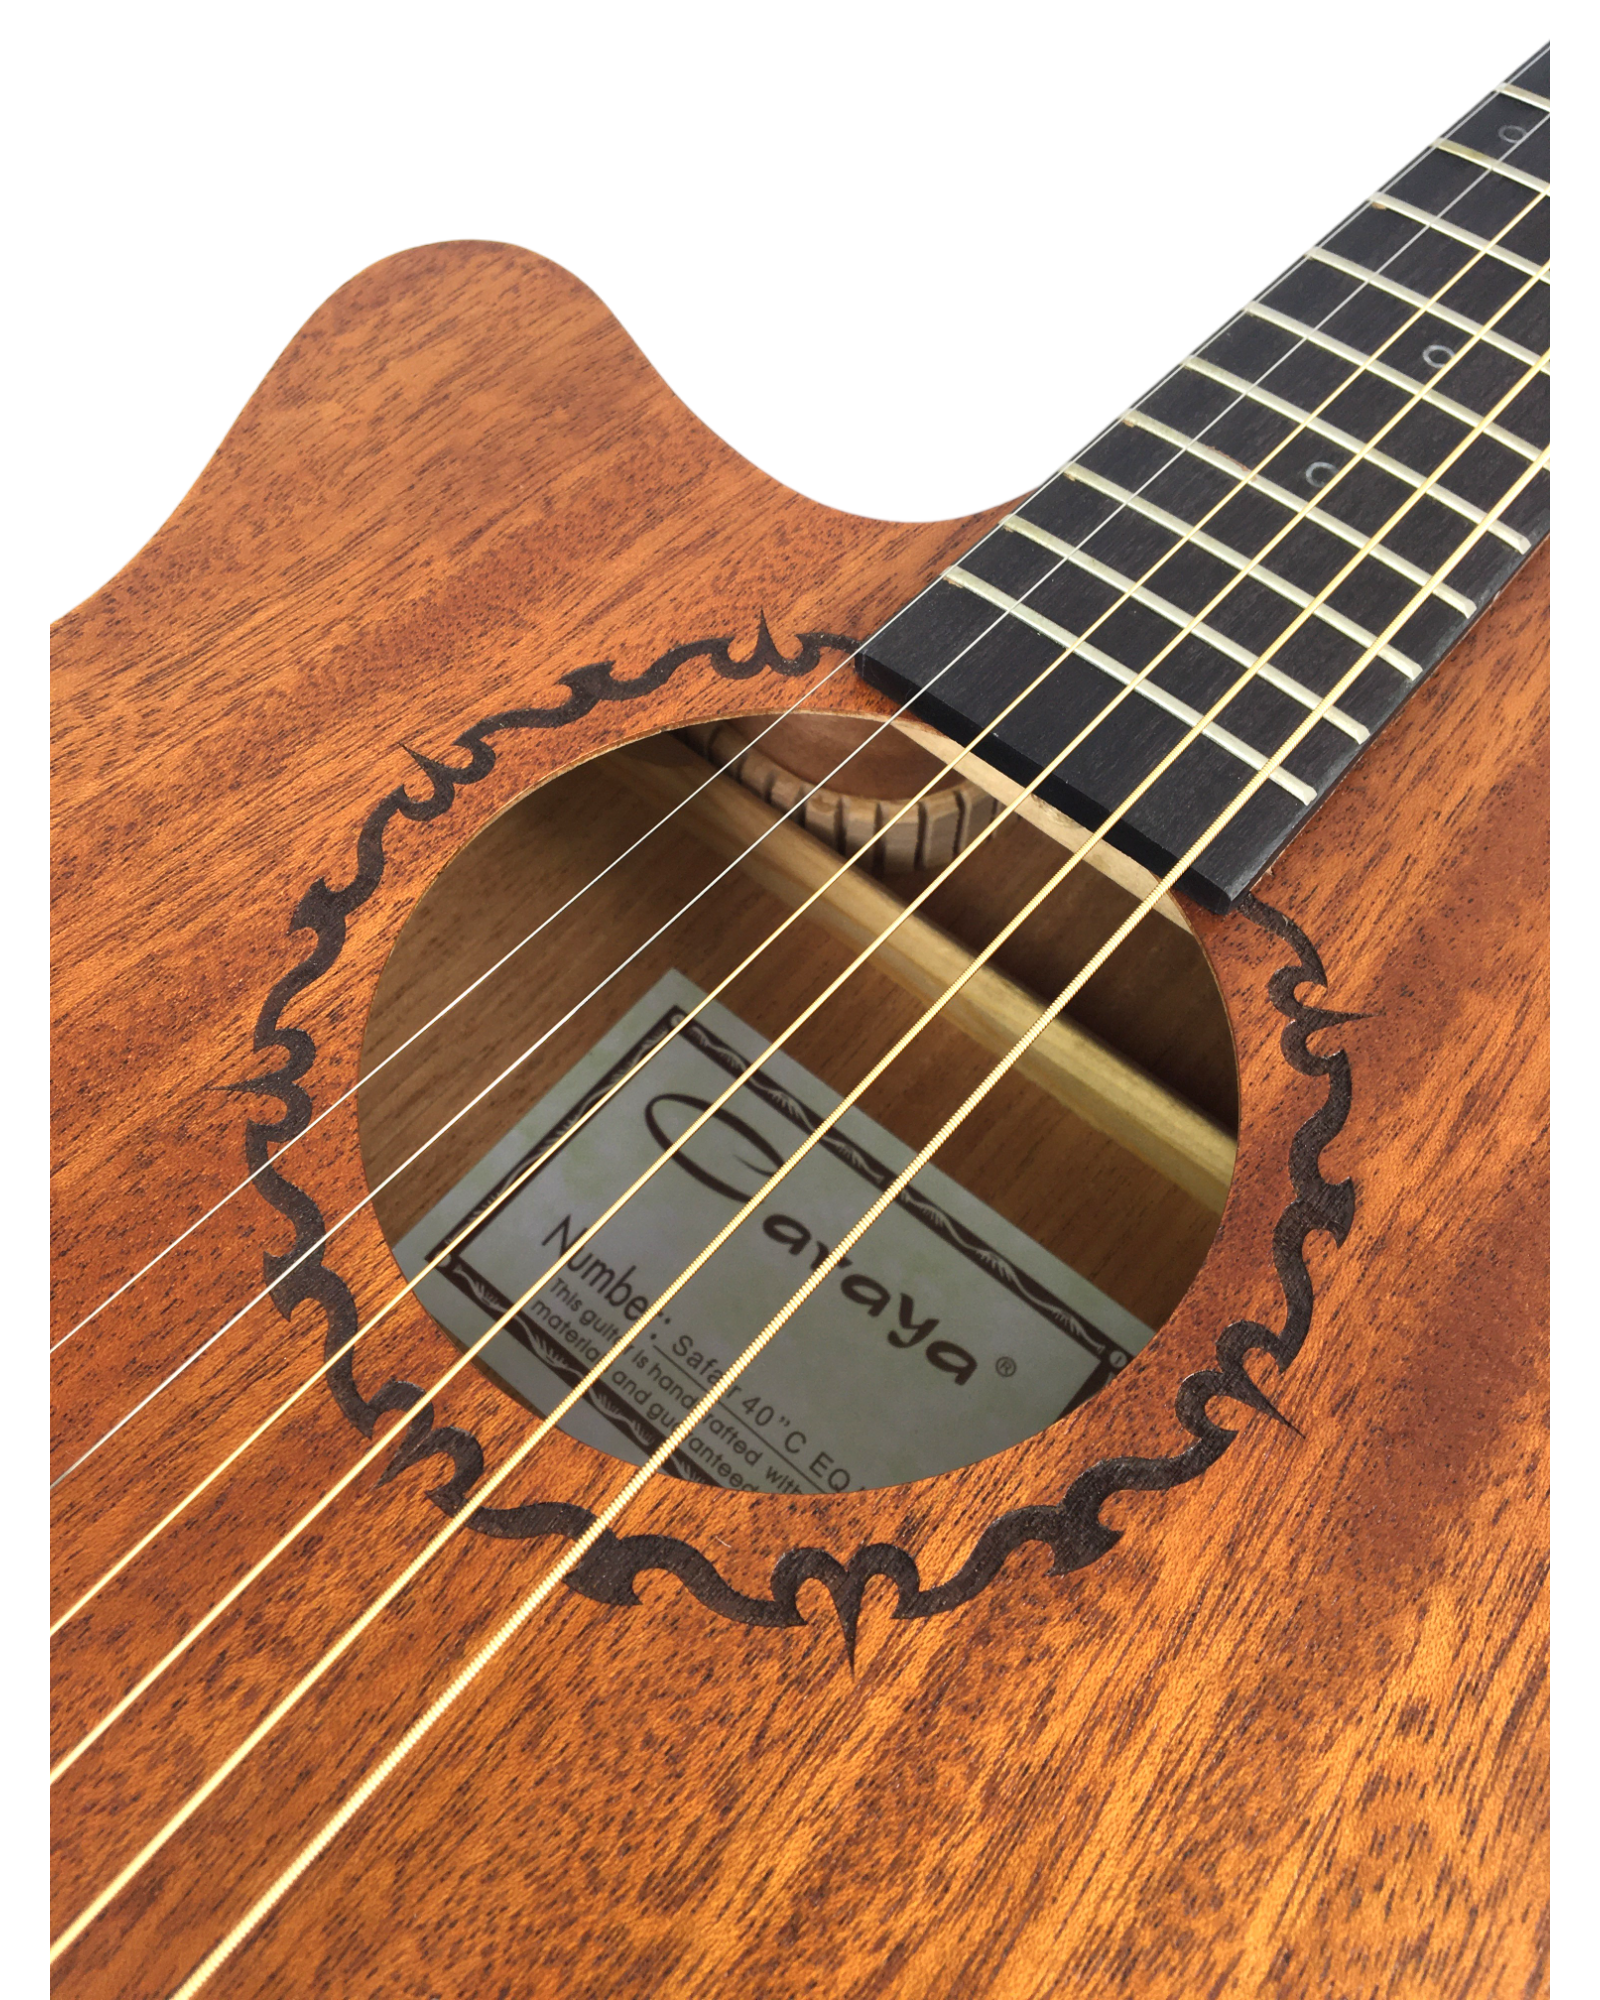 Caraya safair 40-CEQ All-Mahogany Parlor Acoustic Guitar w/EQ + Gig Bag  +Strings